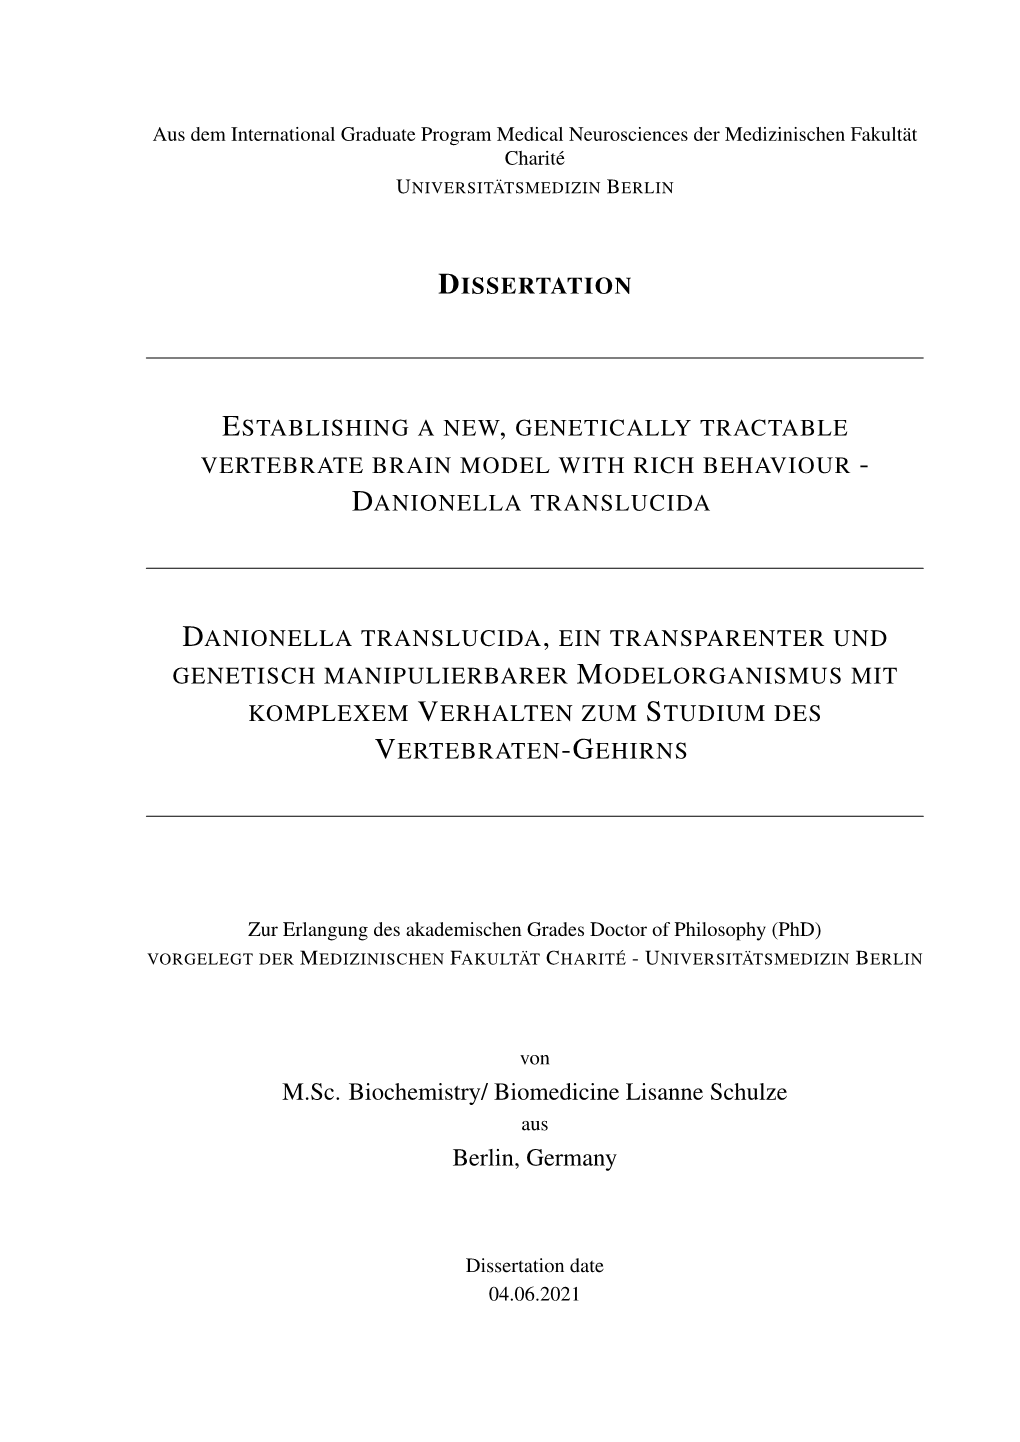 Transparent Danionella Translucida As a Genetically Tractable Vertebrate Brain Model, 2018, Nature Methods